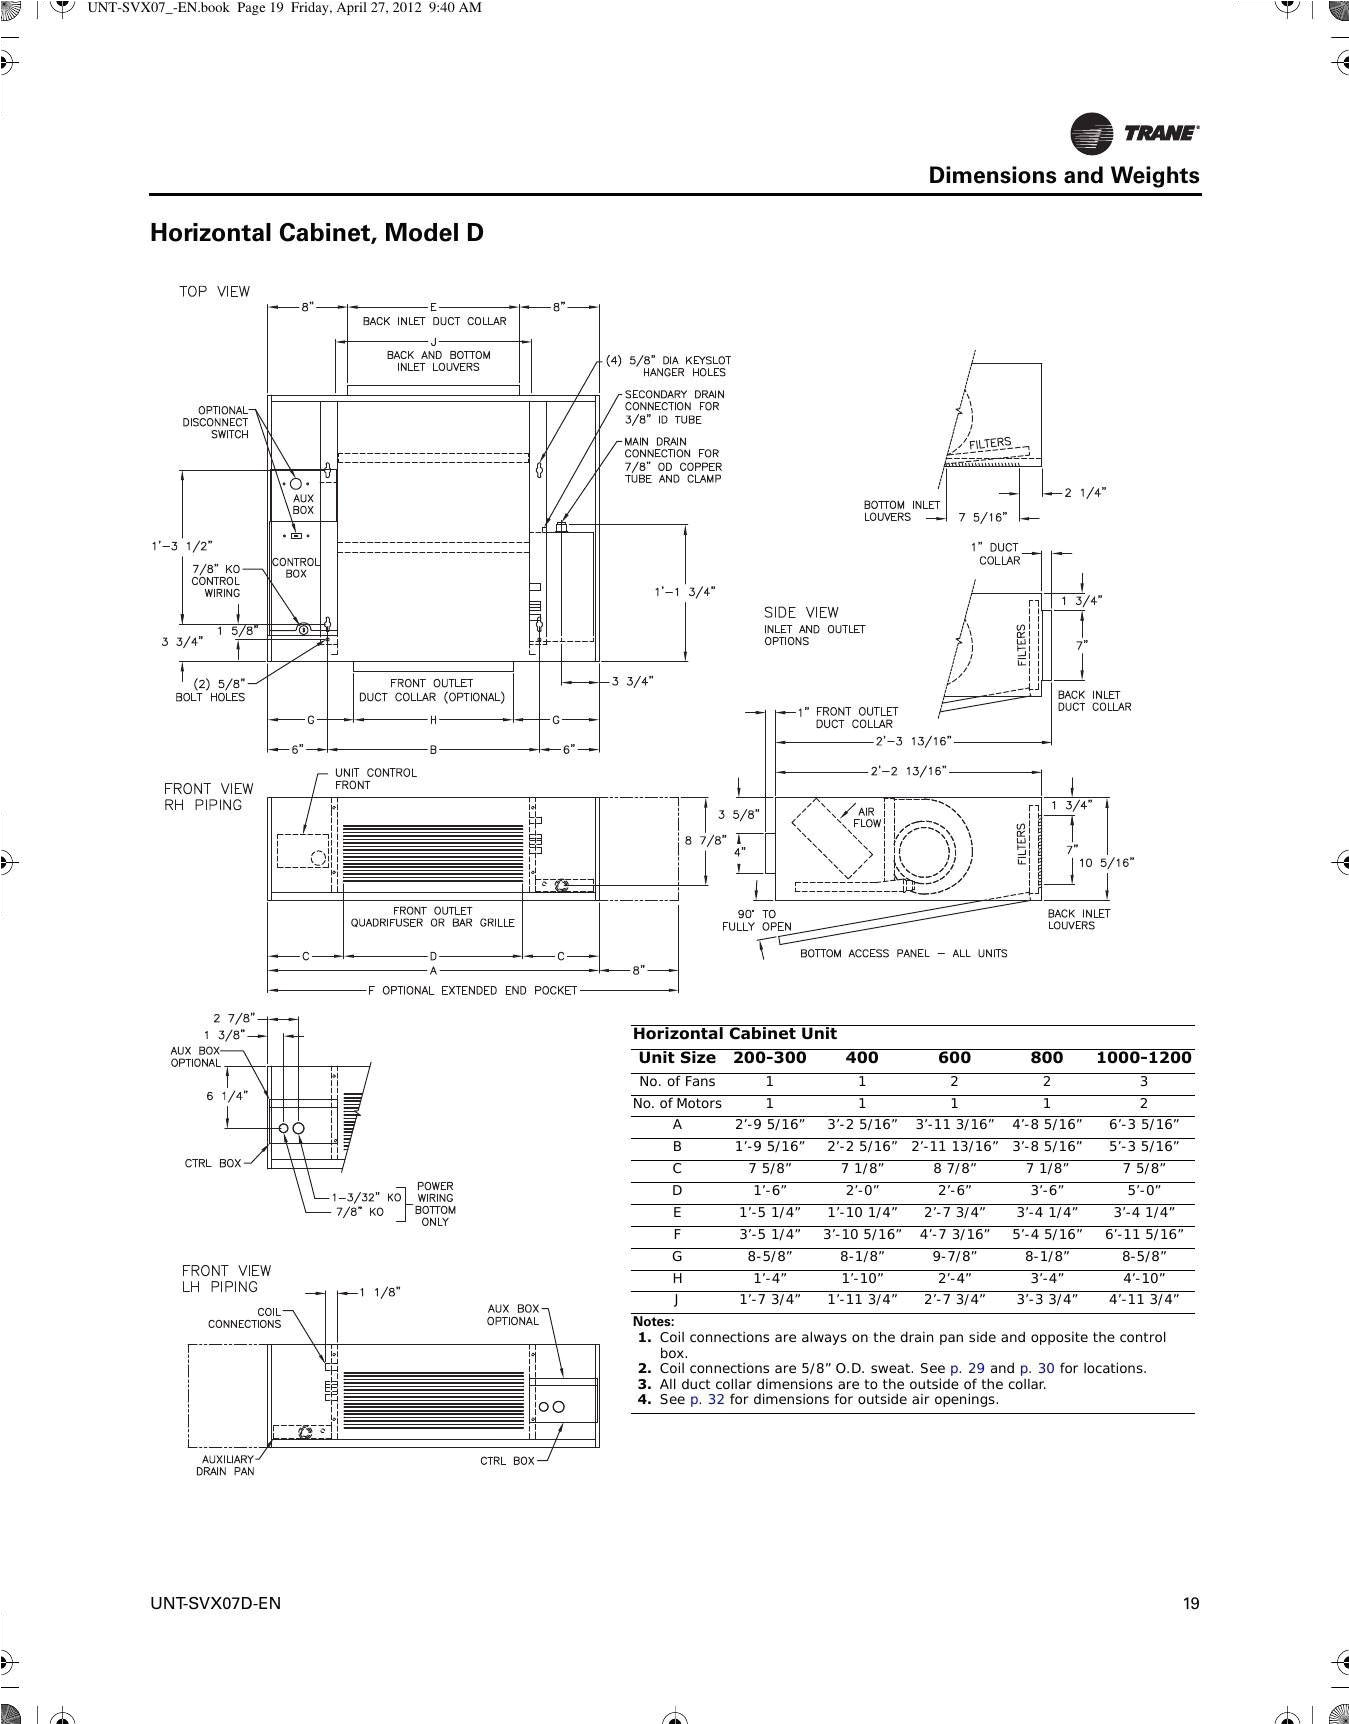 stove plug schematic